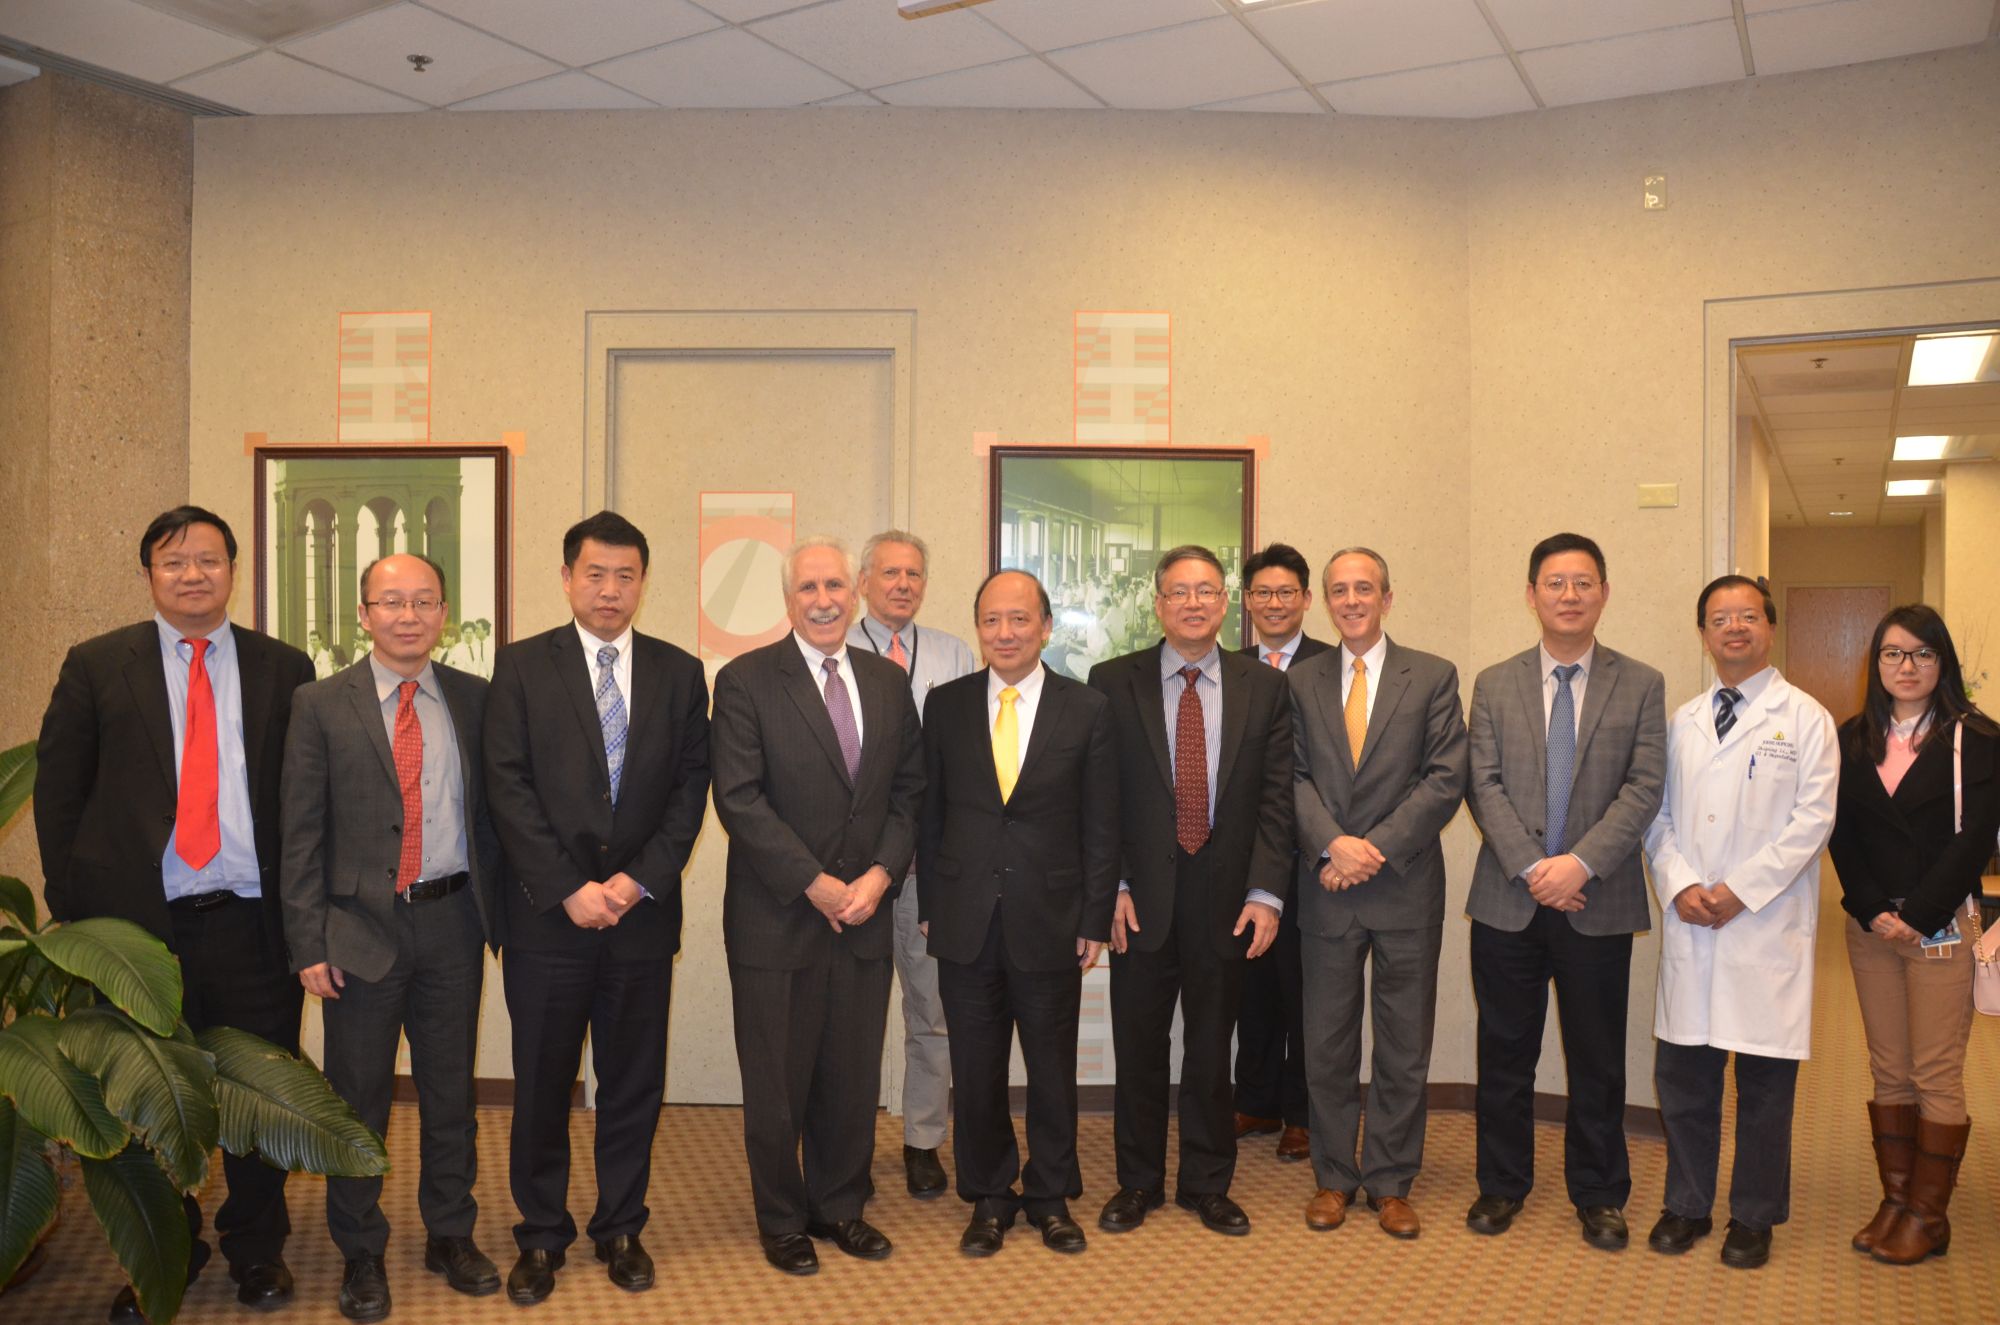 A Delegation Led by President Chen Shiyi Visits Johns Hopkins University for Strengthening Cooperation